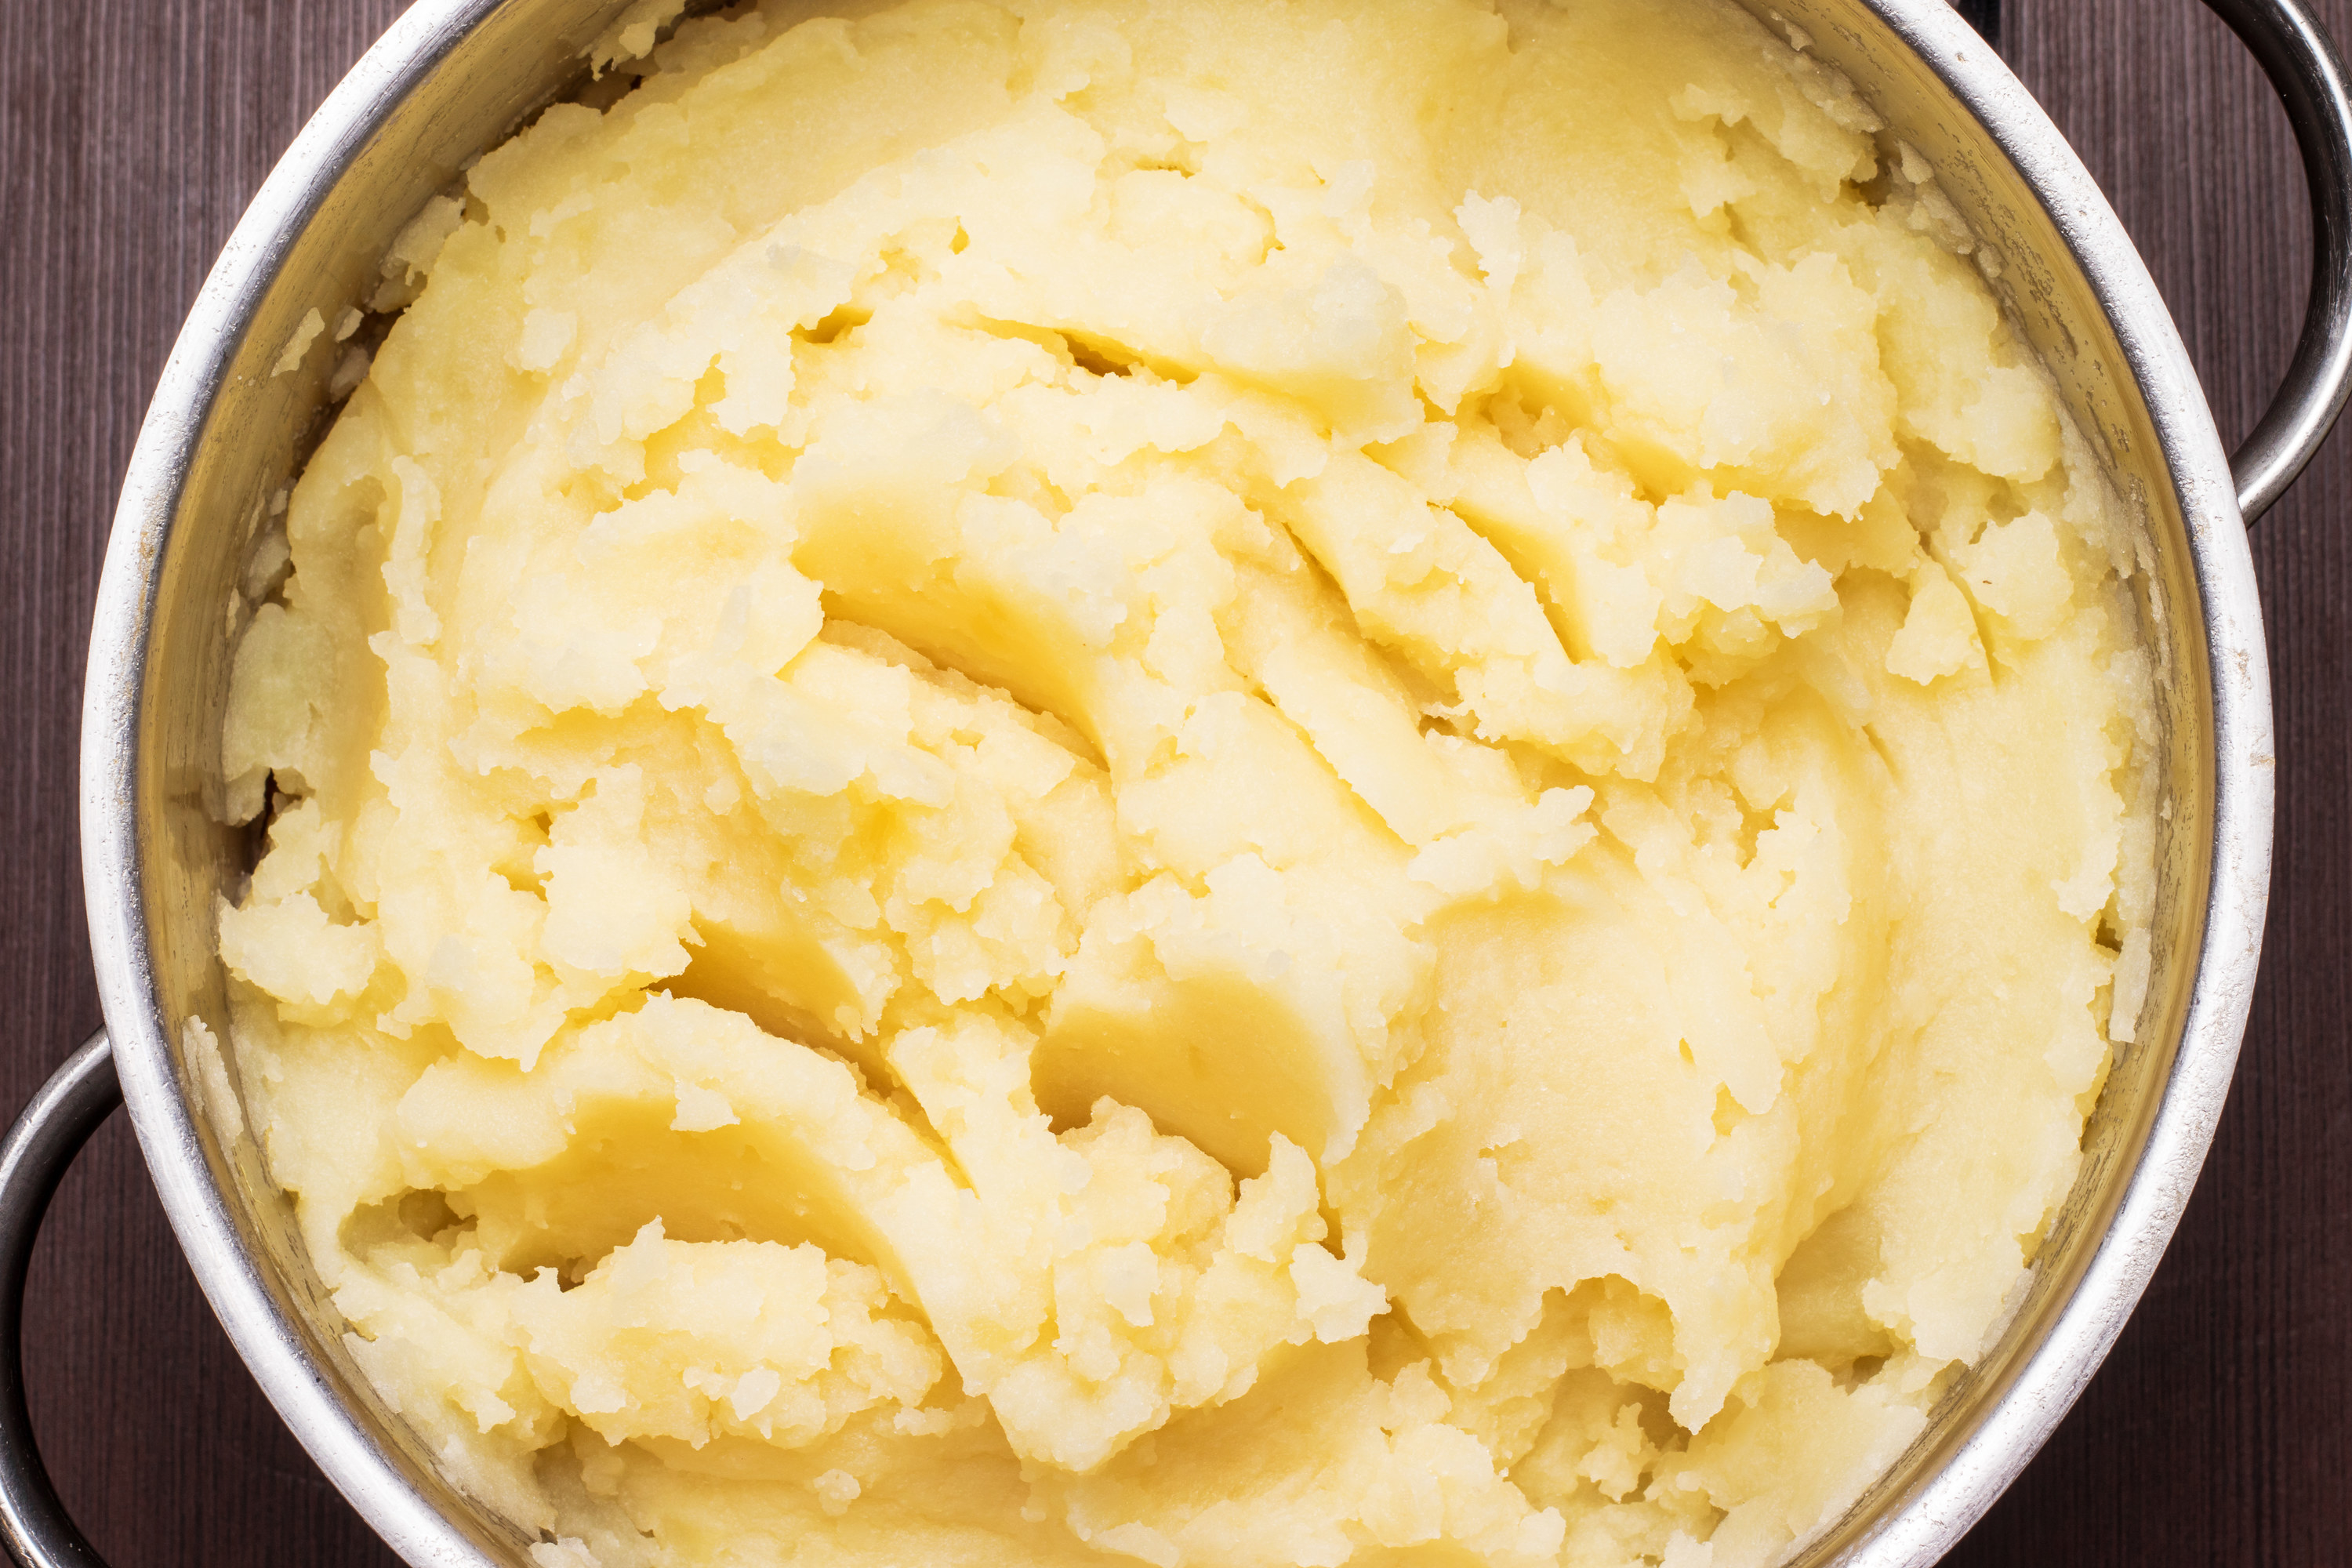 a pot of mashed potatoes